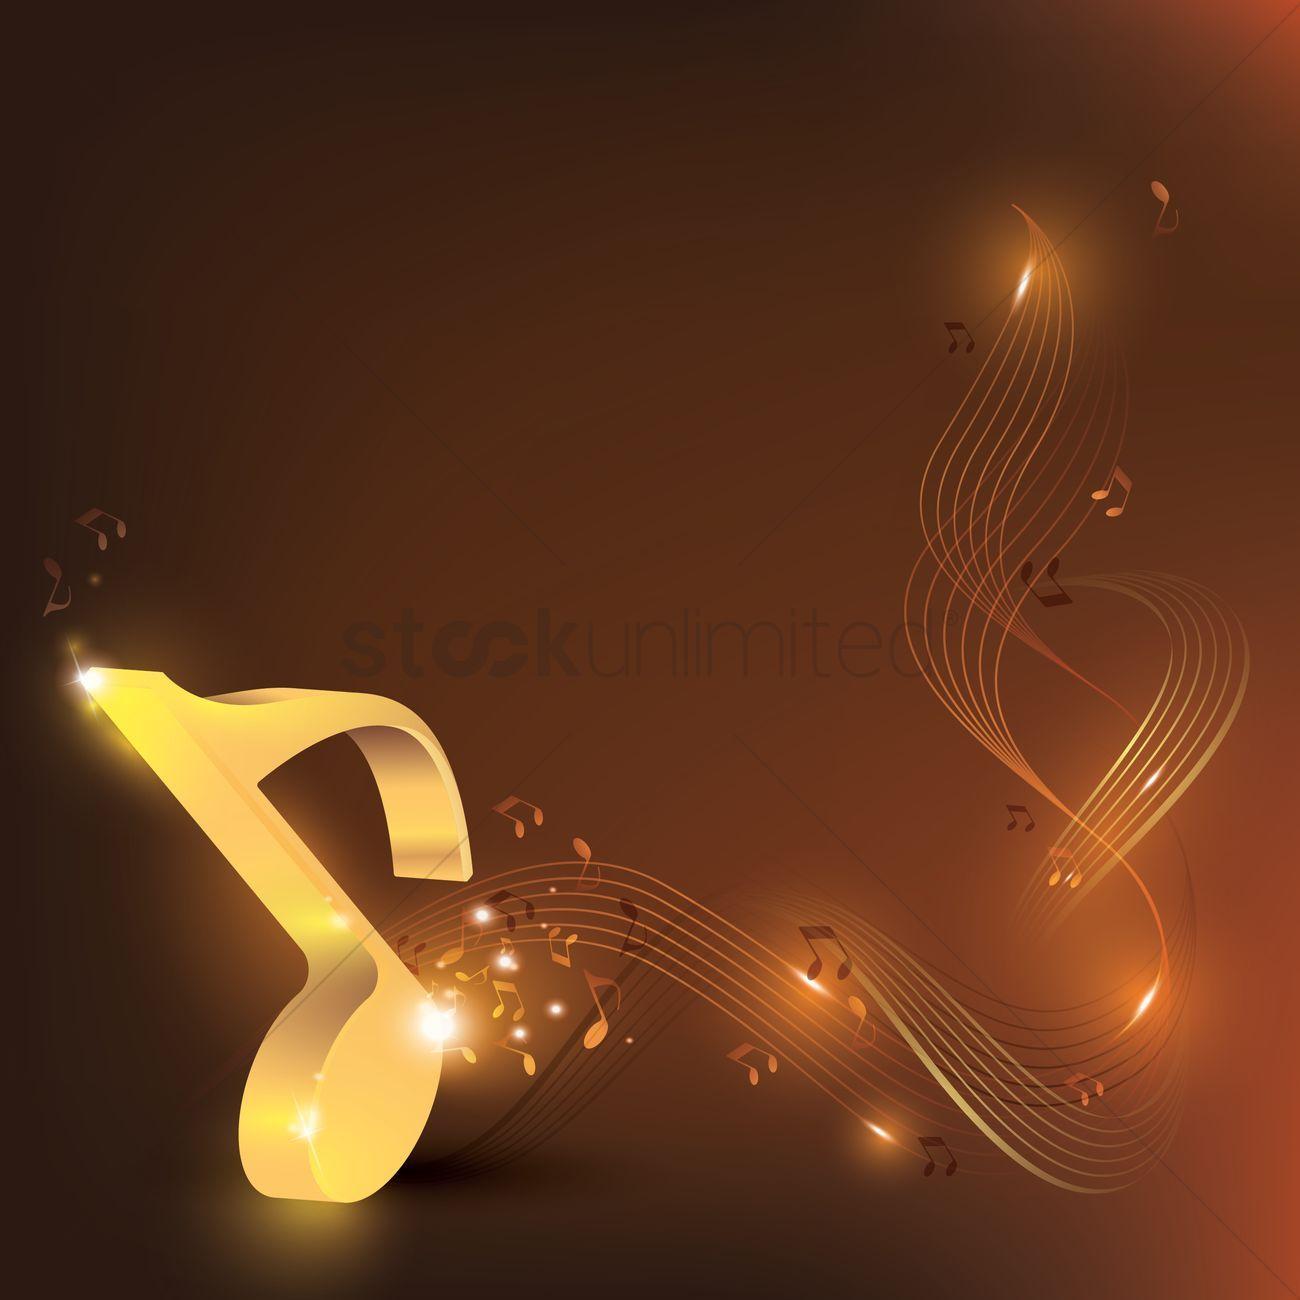 Musical background design Vector Image